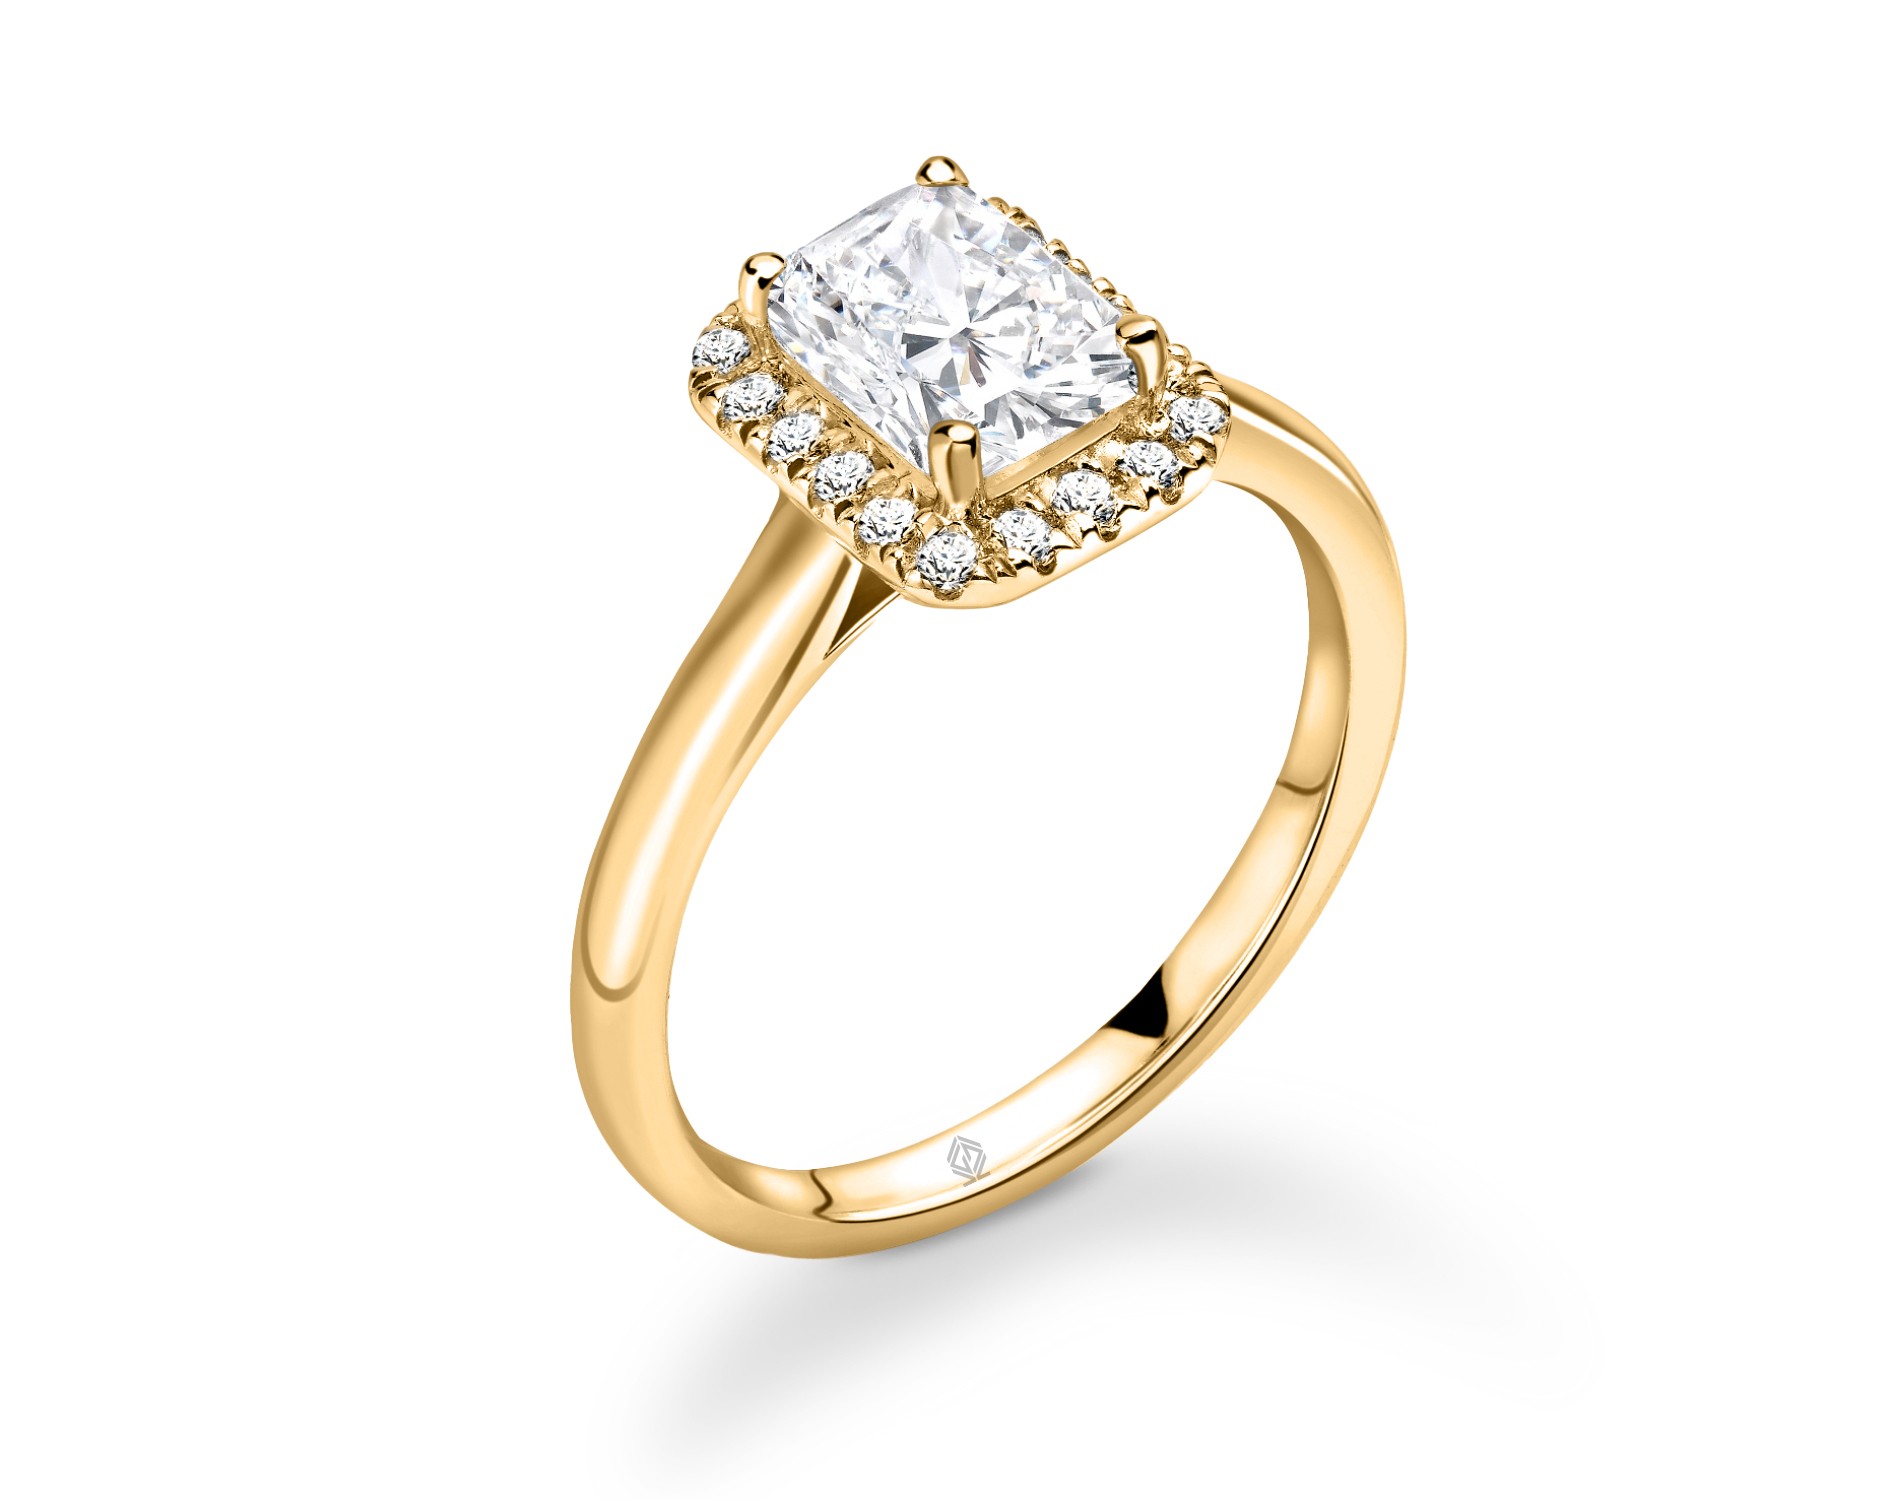 18K YELLOW GOLD HALO SET EMERALD CUT DIAMOND ENGAGEMENT RING